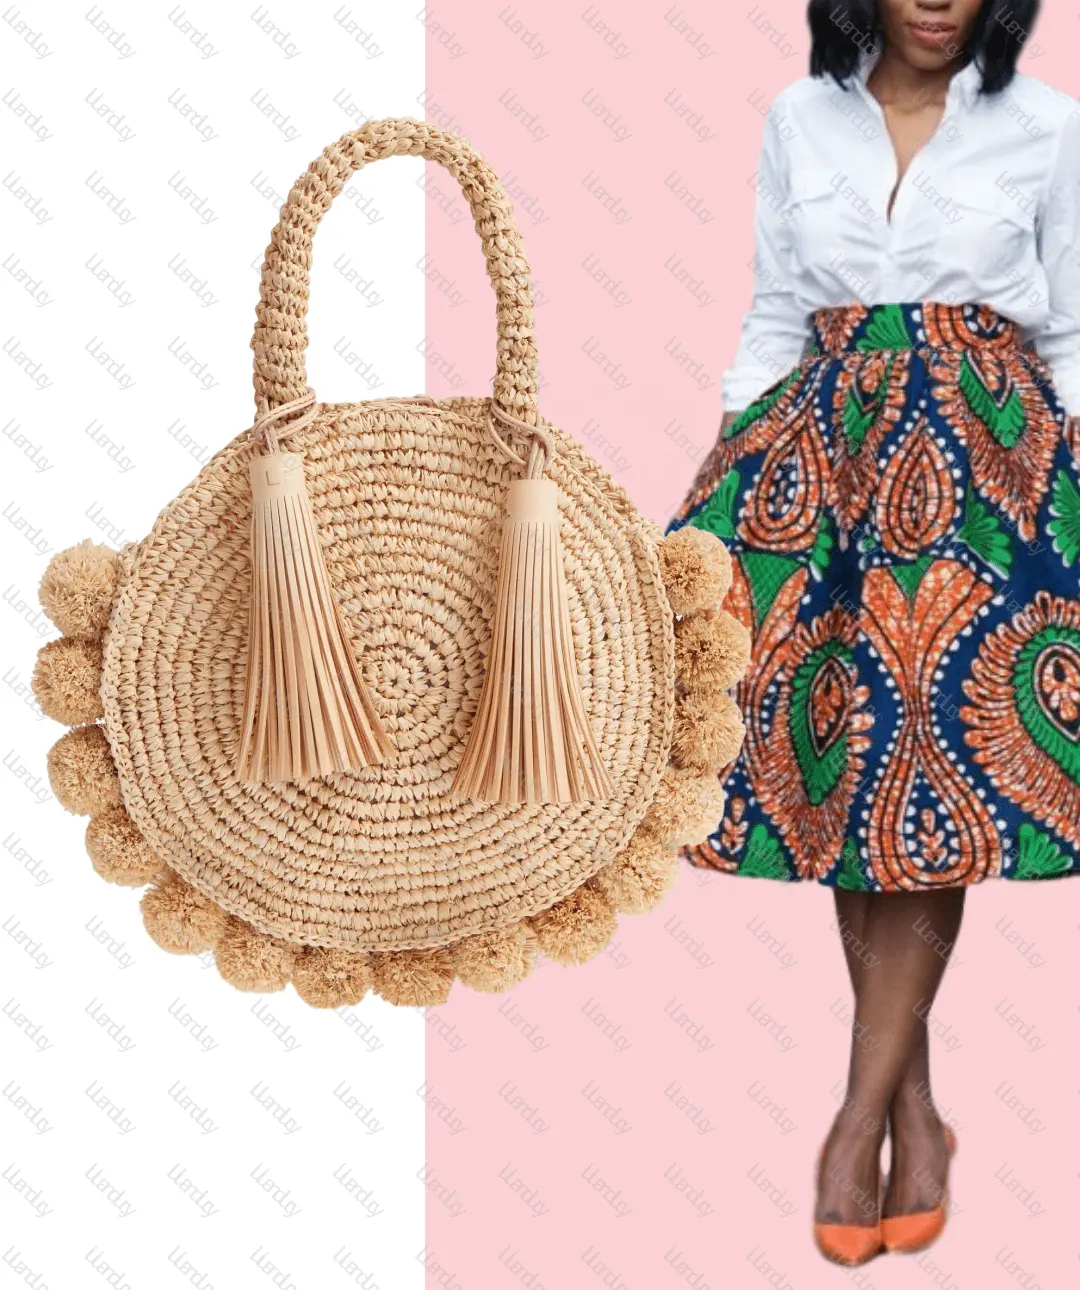 Luluandlucy ancara círculo da moda malha tecido raffiia sacos